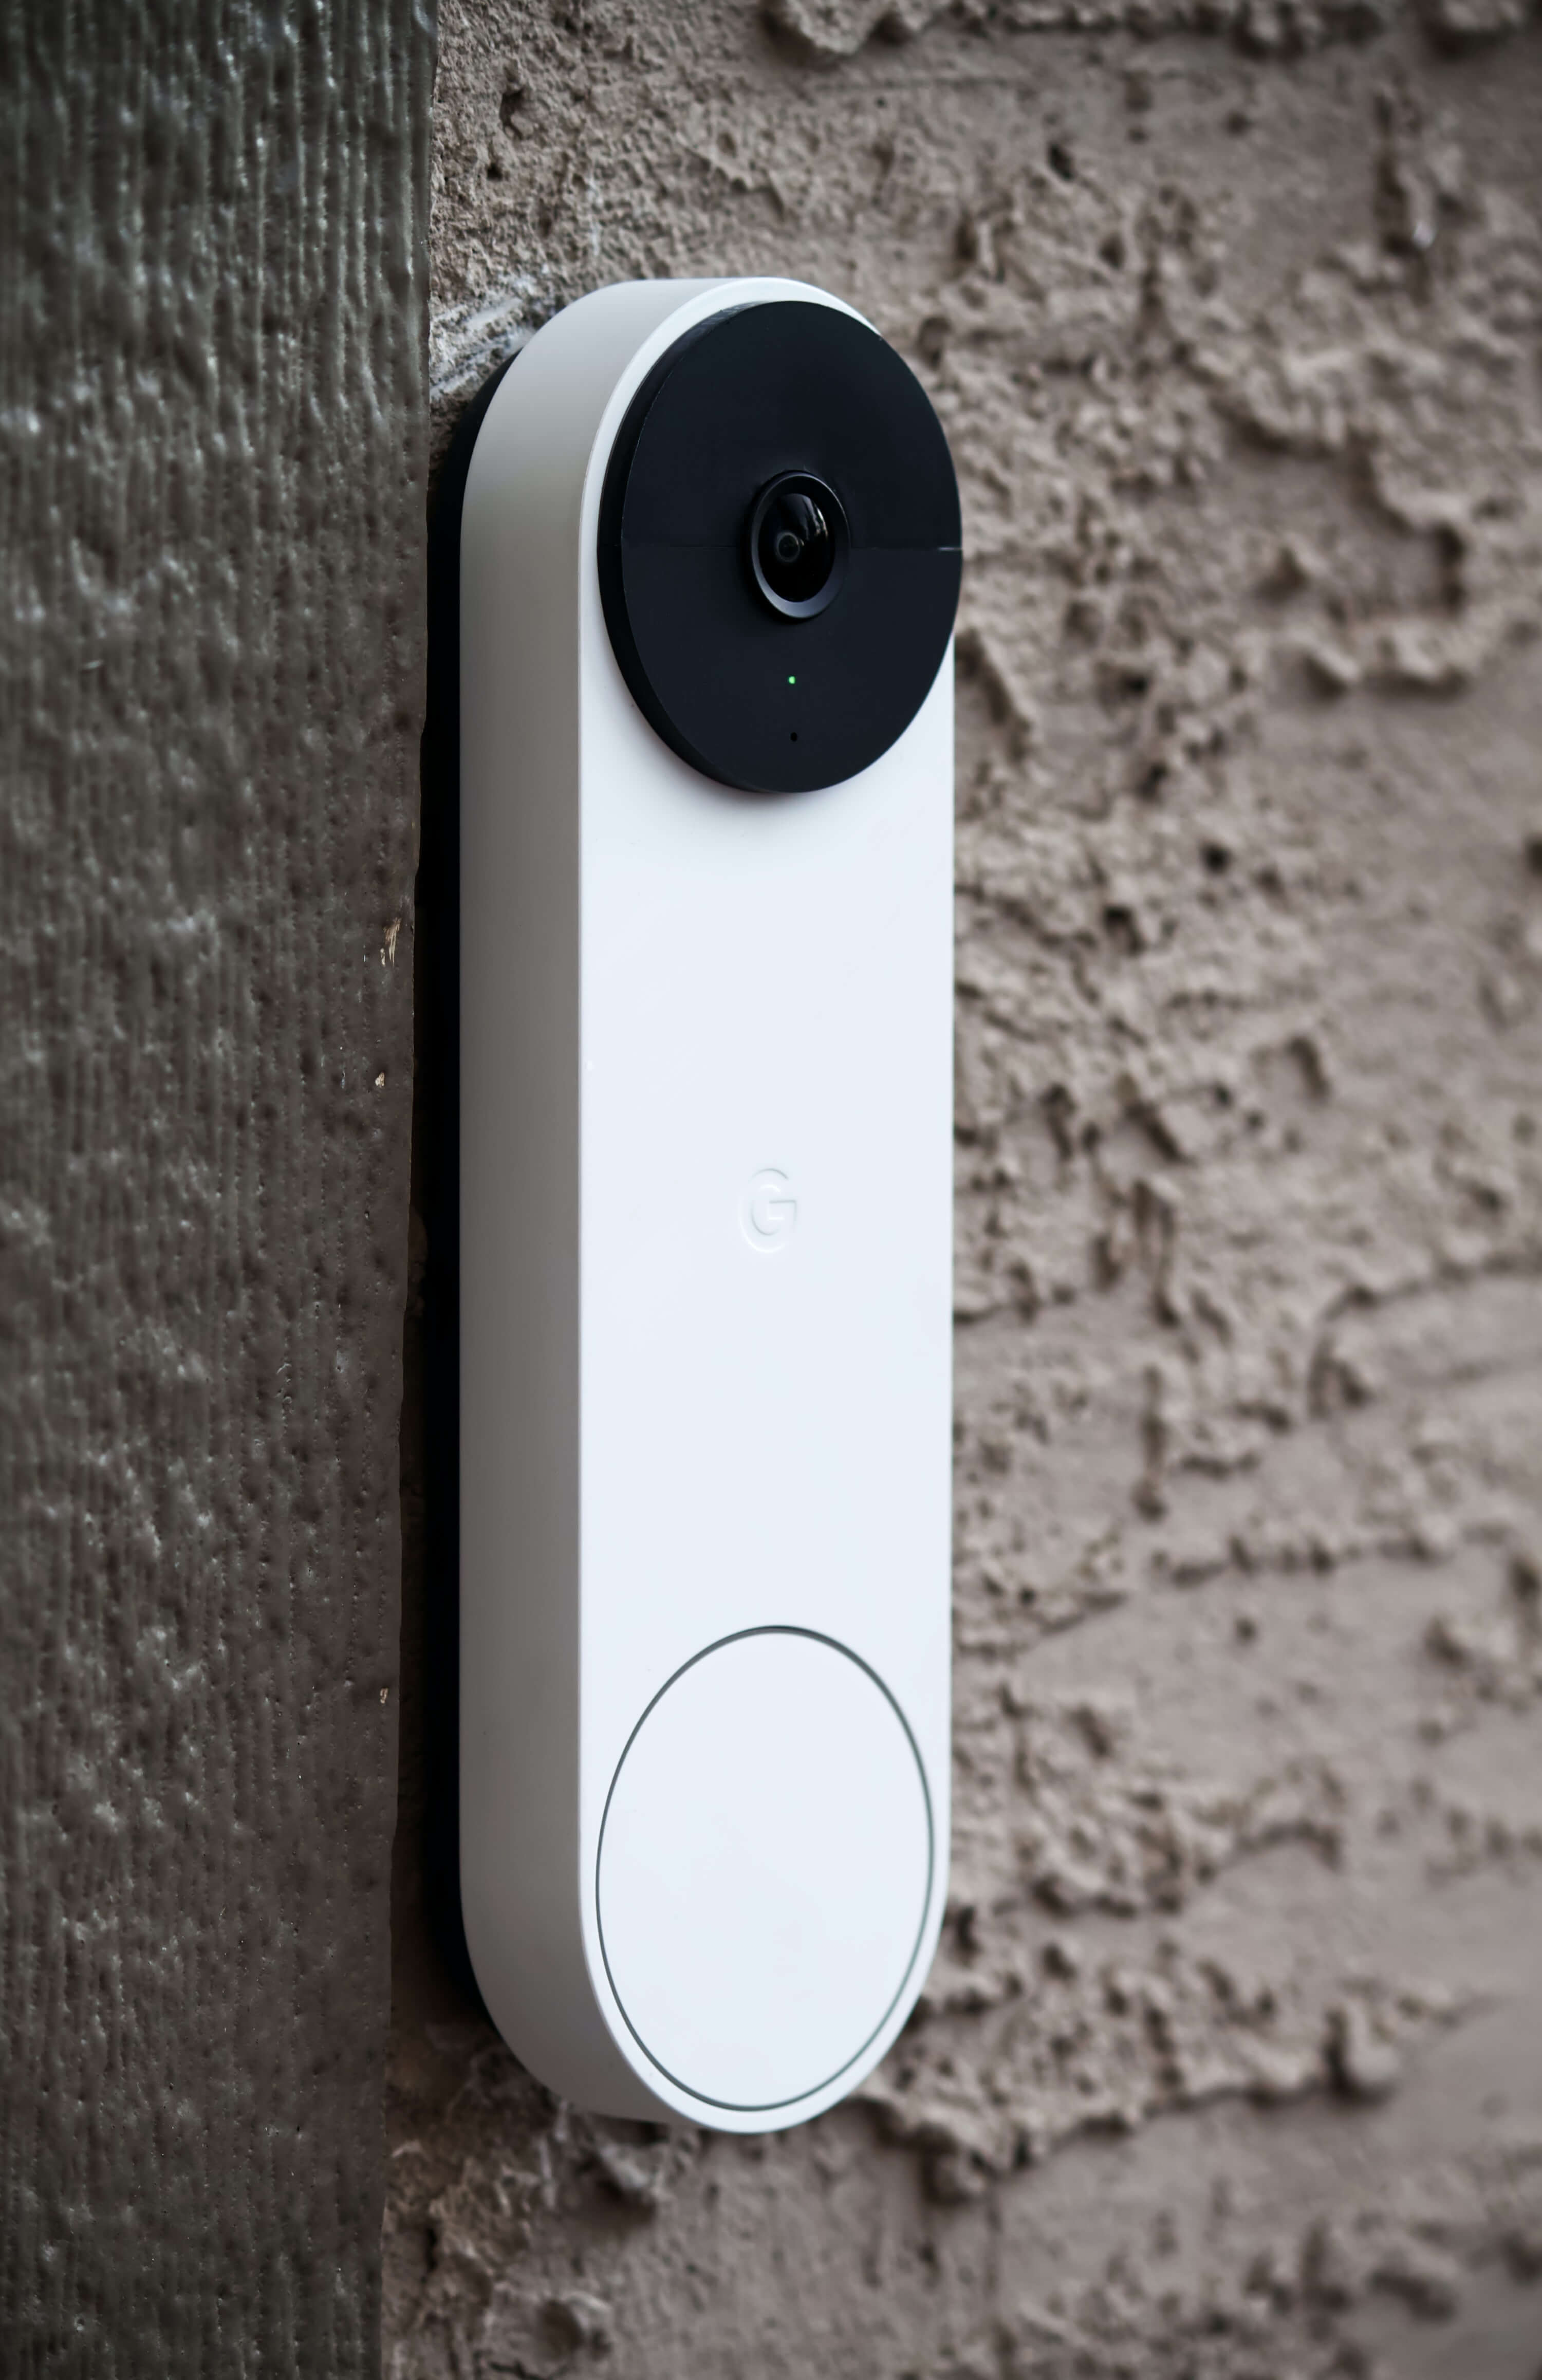 Safety security nest doorbell camera